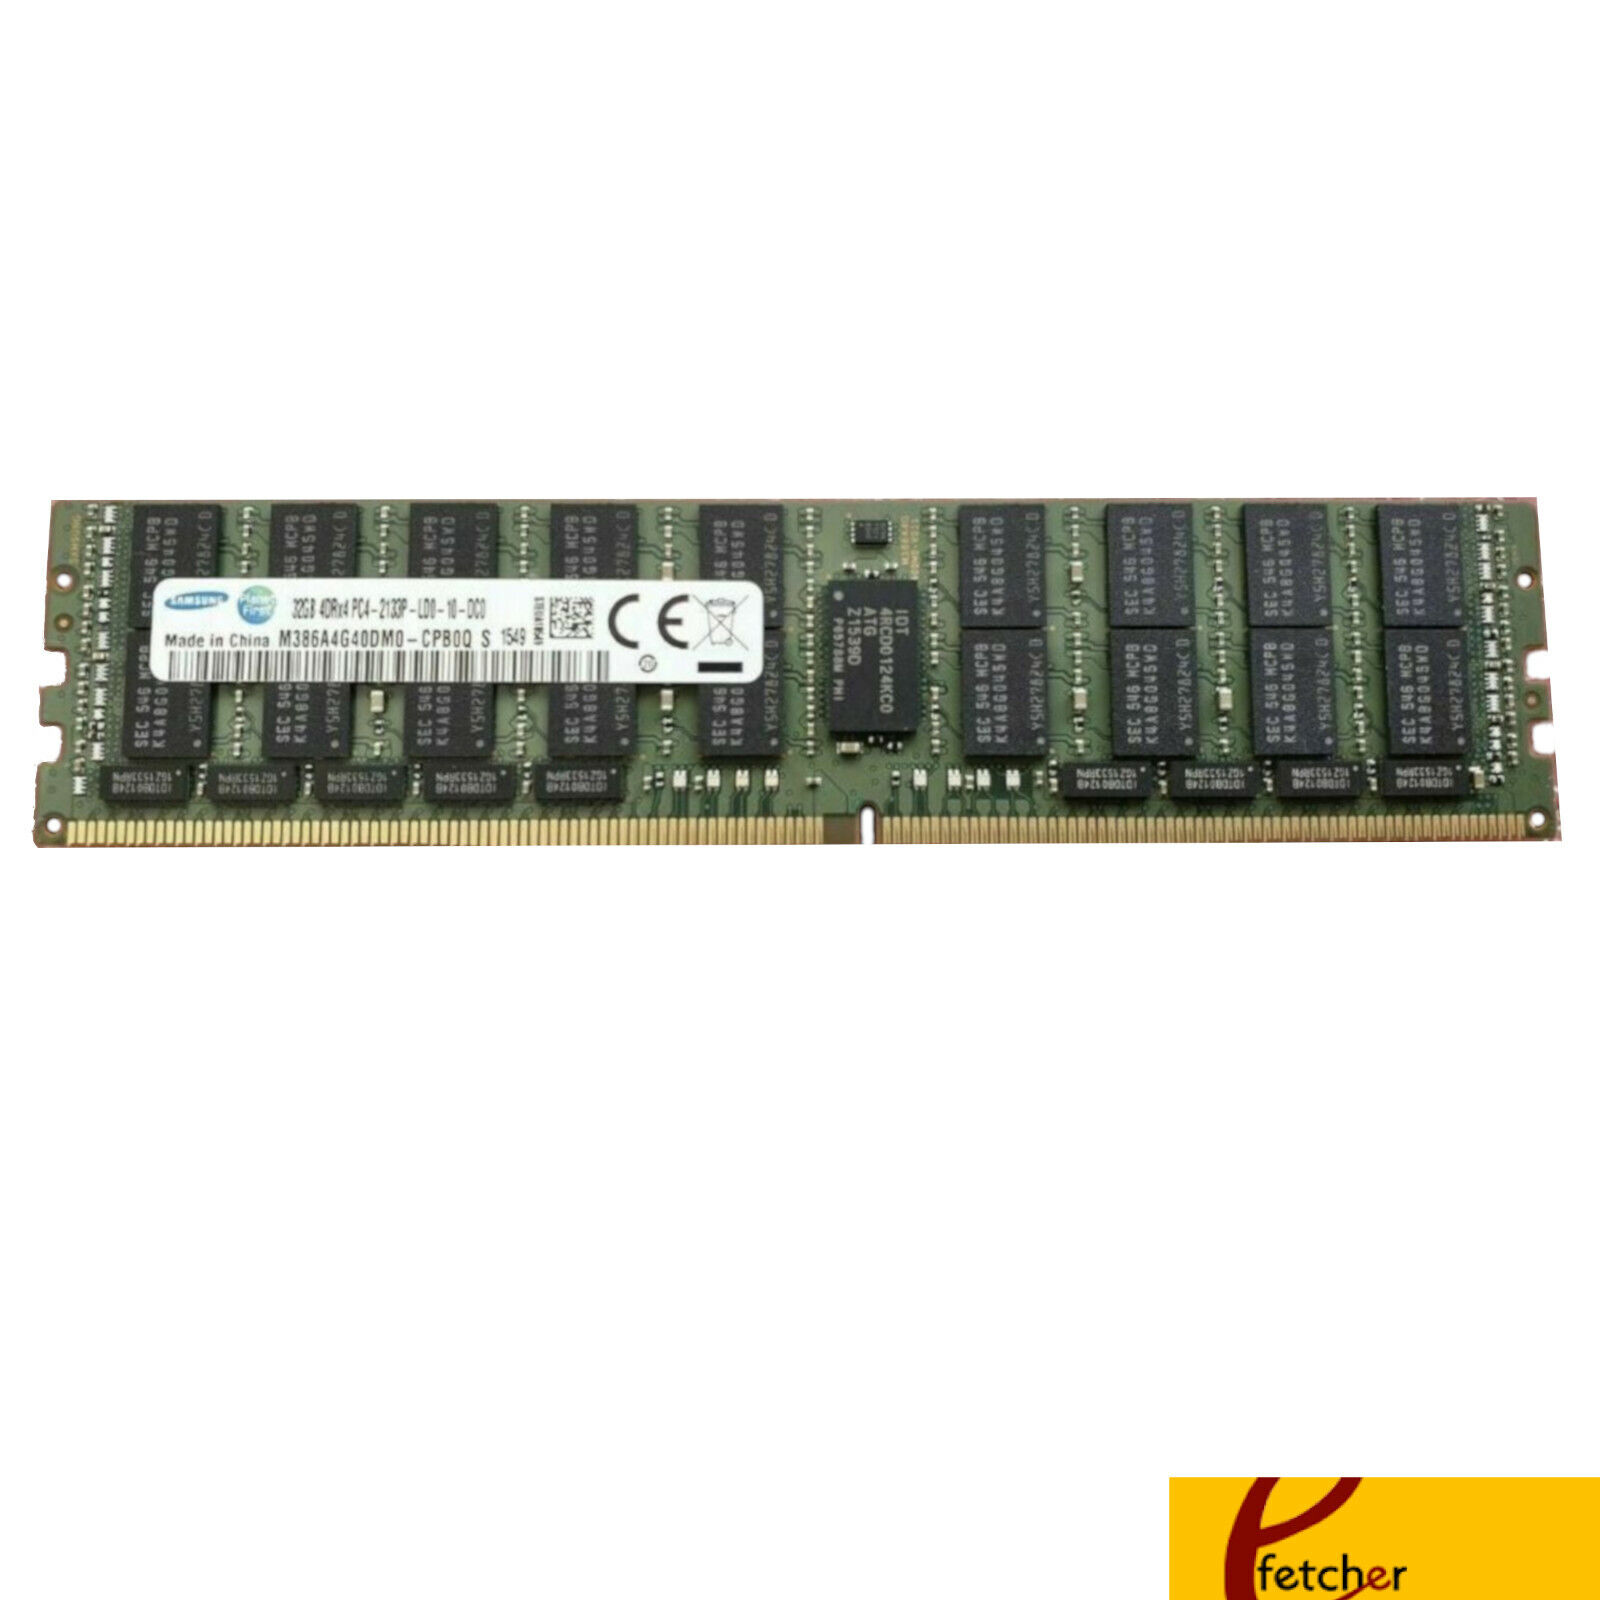 768GB (24x32GB) DDR4 2133MHz ECC LRDIMM Memory Dell PowerEdge R730 R730xd R630